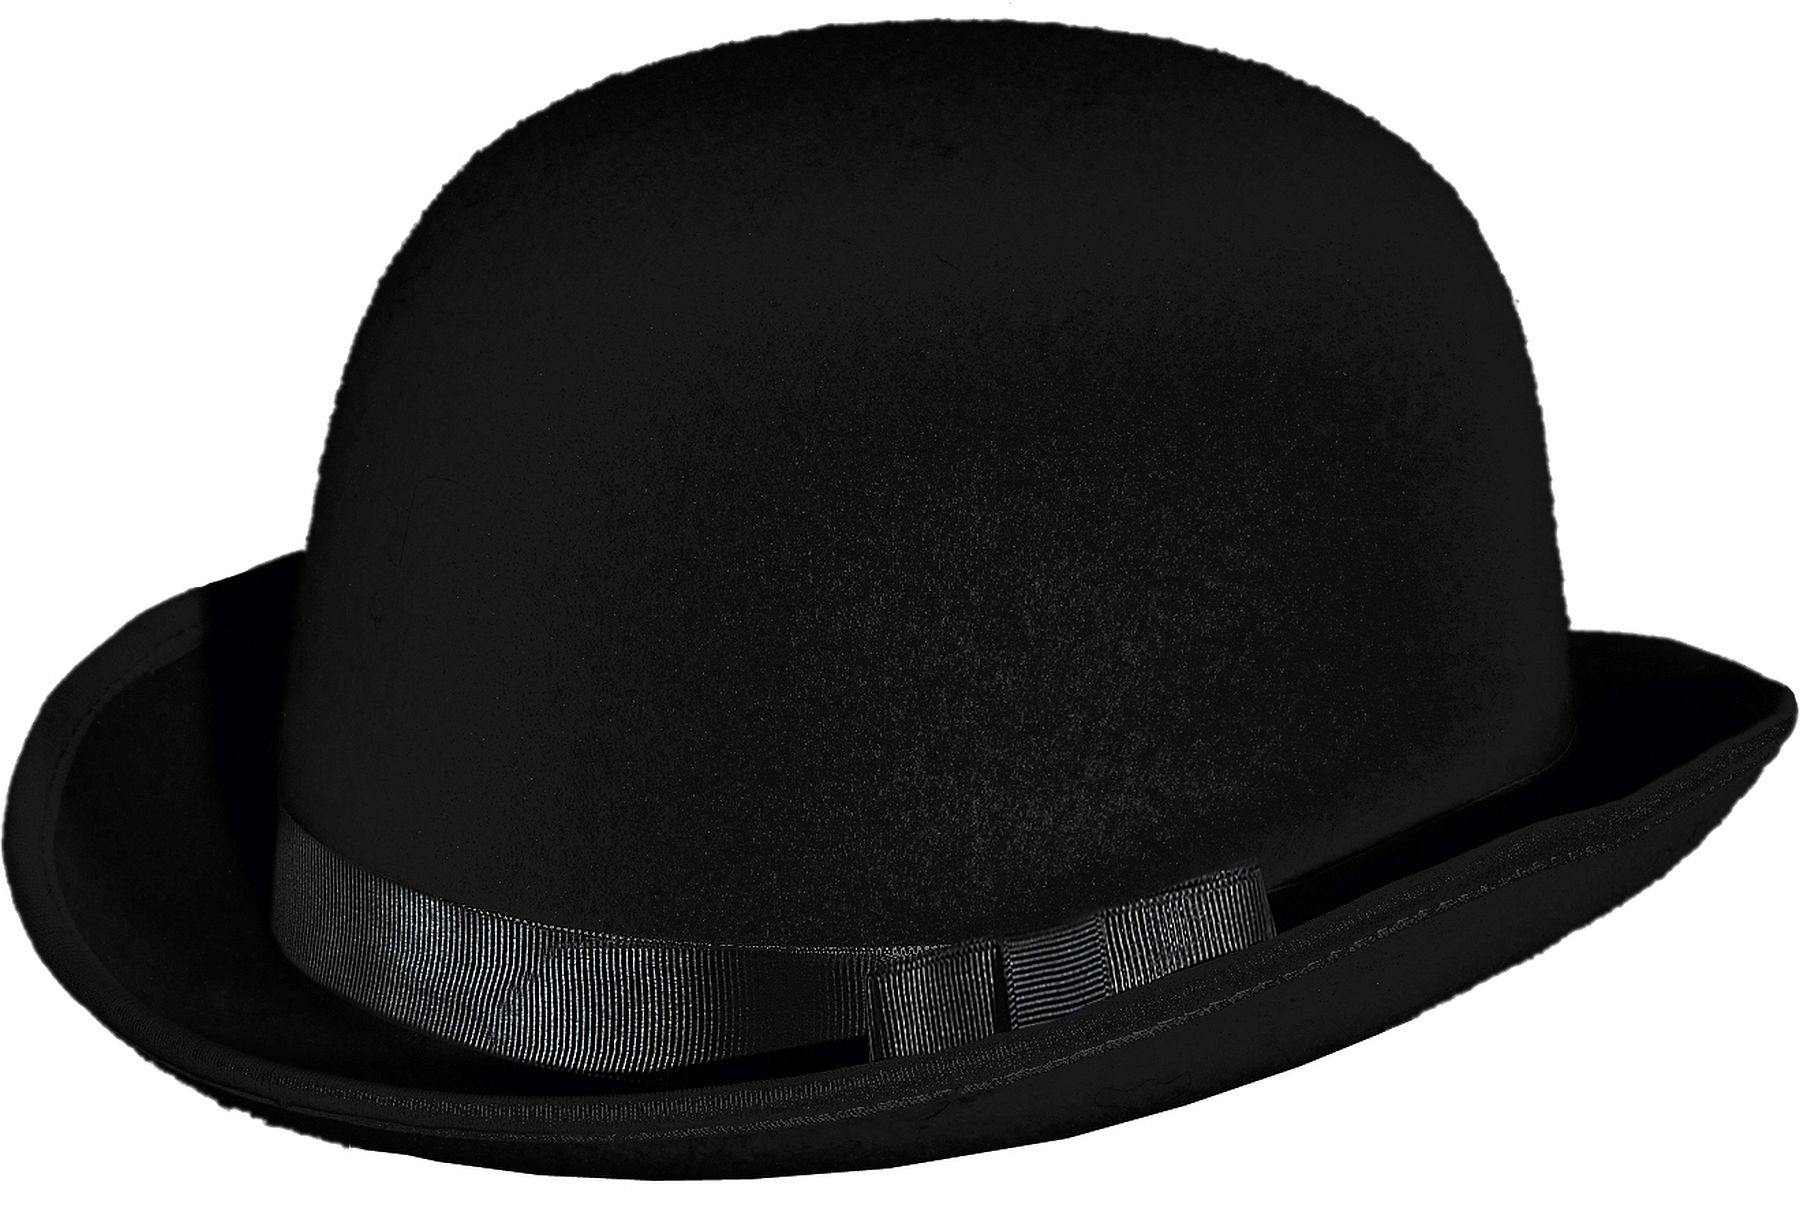 Bowler hat, black